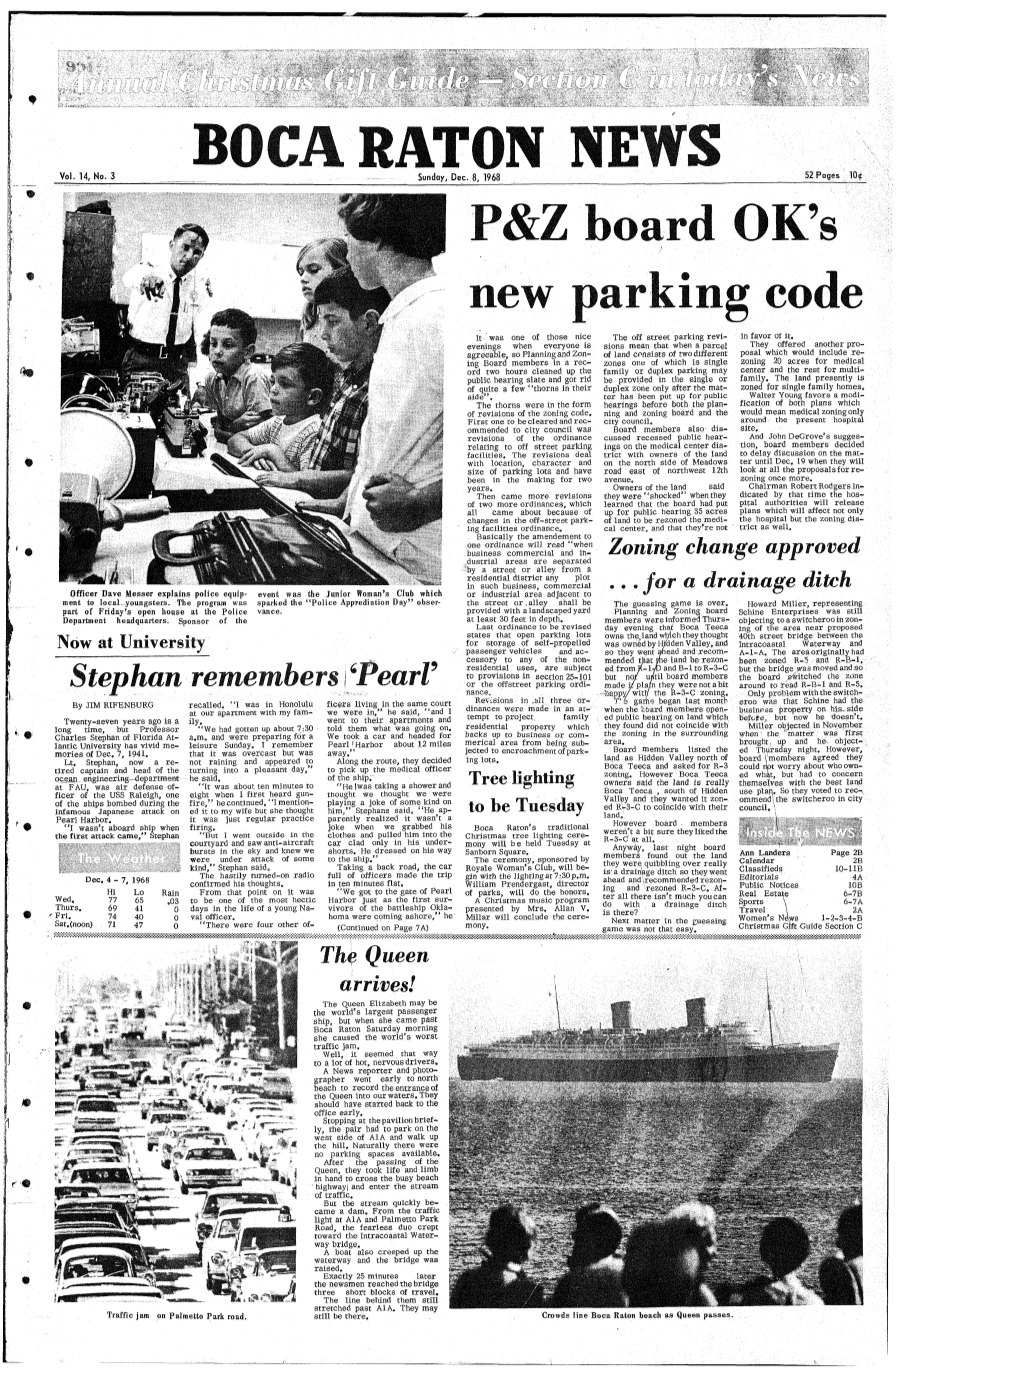 8, 1968 P&Z Board OK's New Parking Code